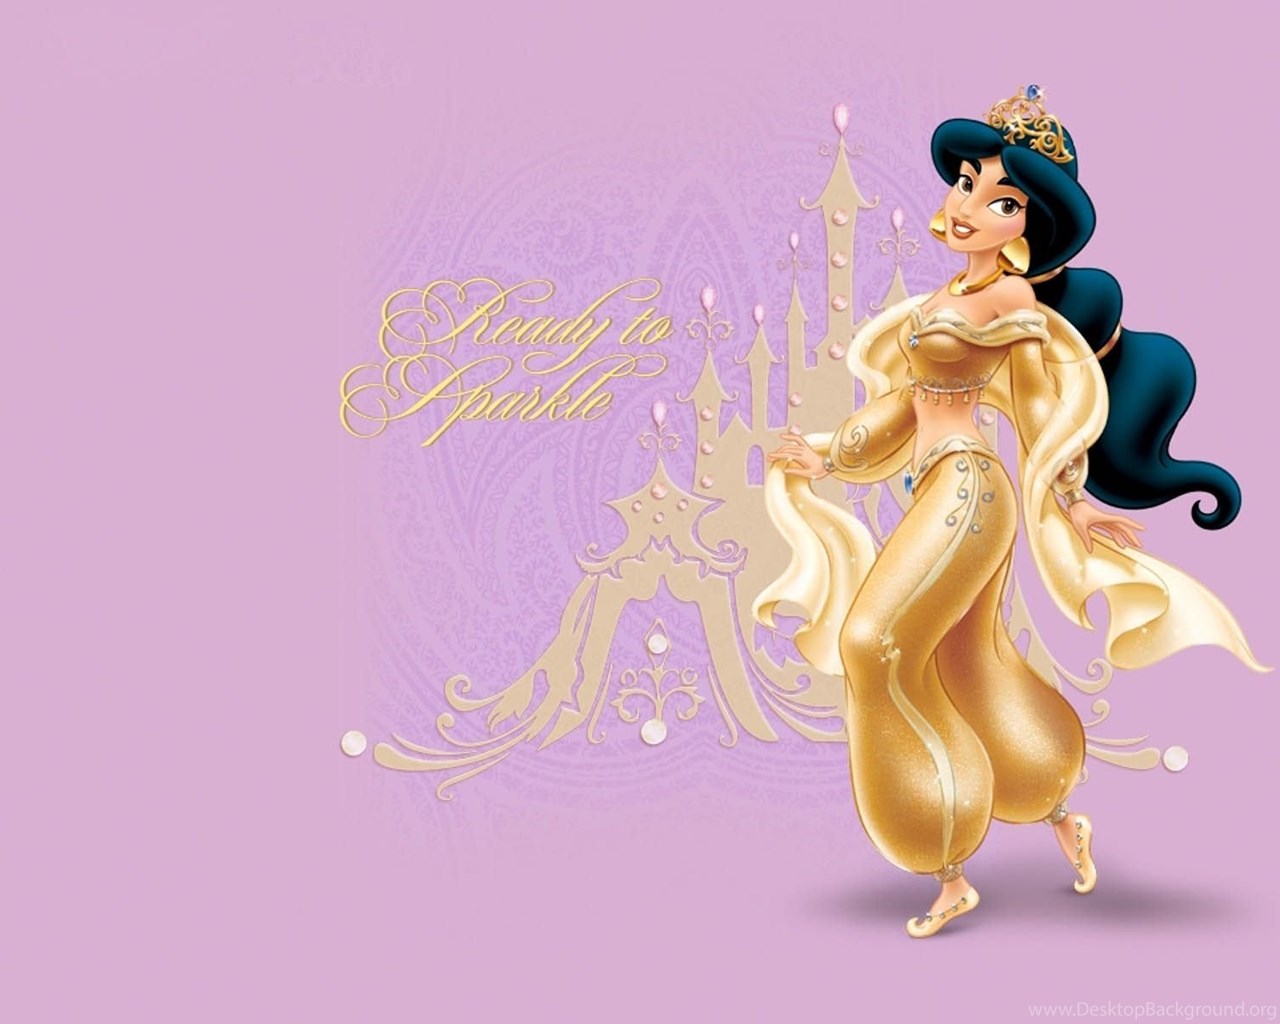 Download Wallpapers: Disney Princess Jasmine Wallpapers Popular 1280x1024 D...